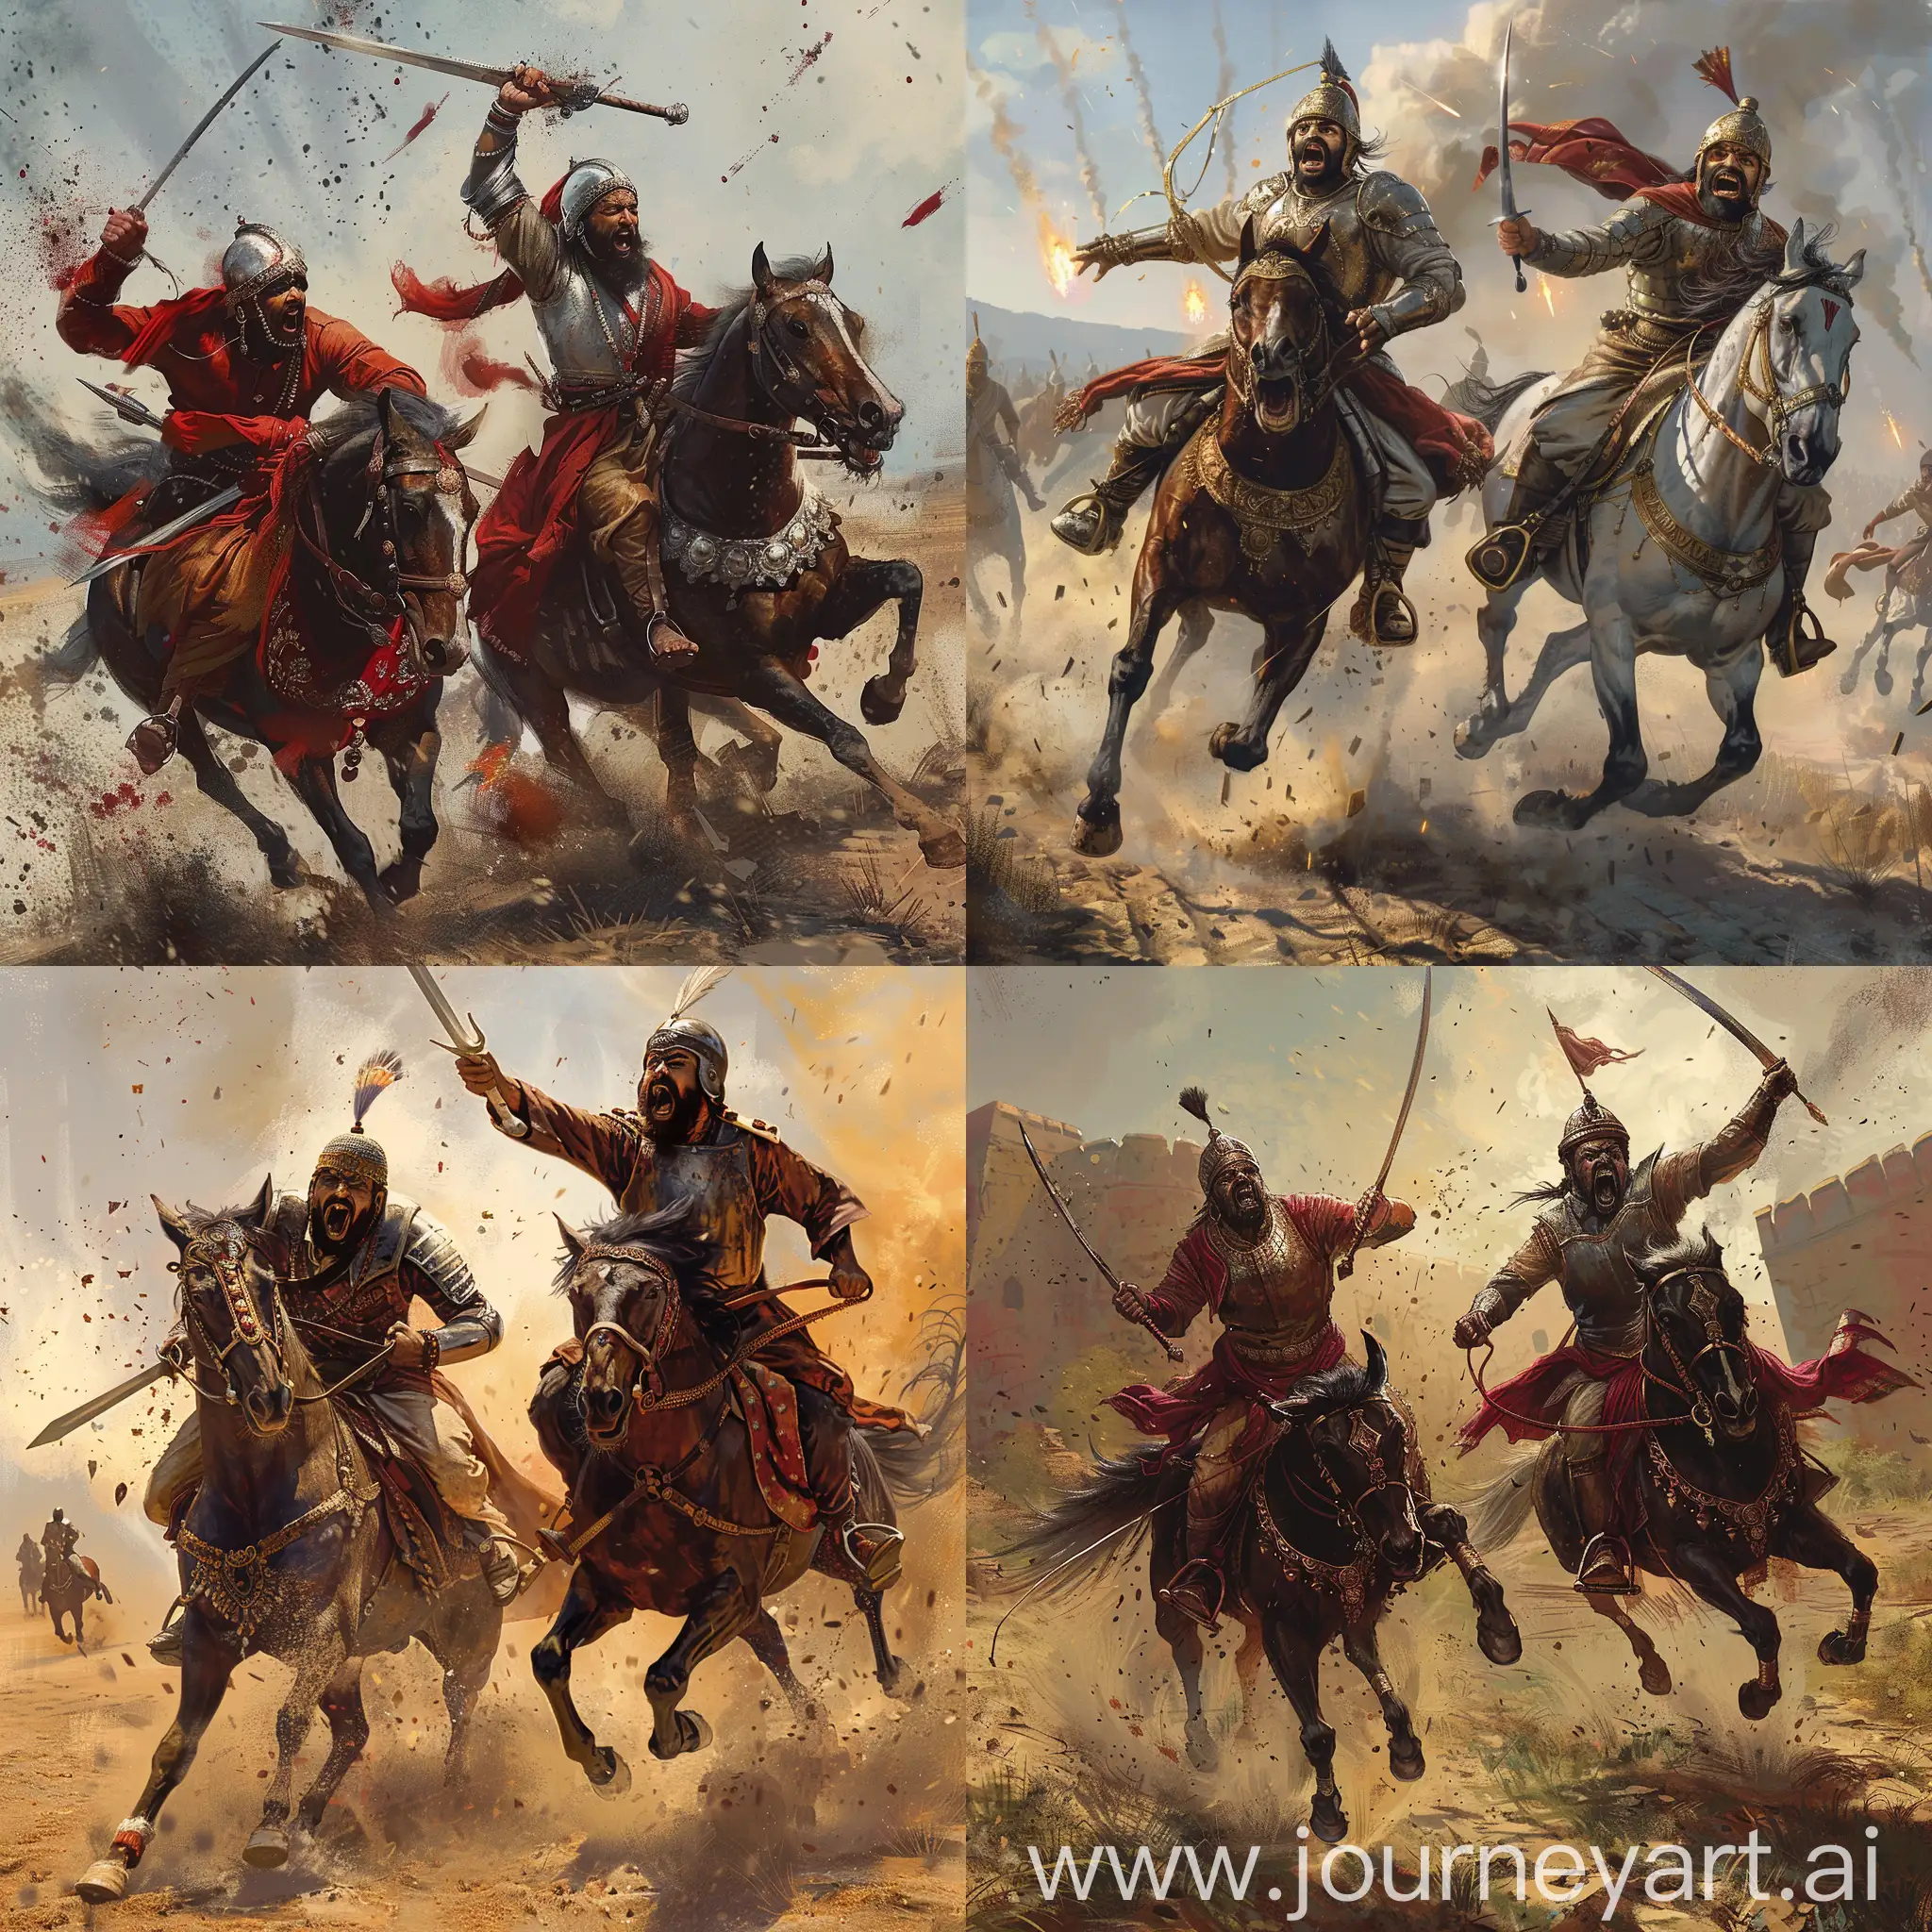 Fierce-Rajput-Horsemen-Charging-with-Swords-Drawn